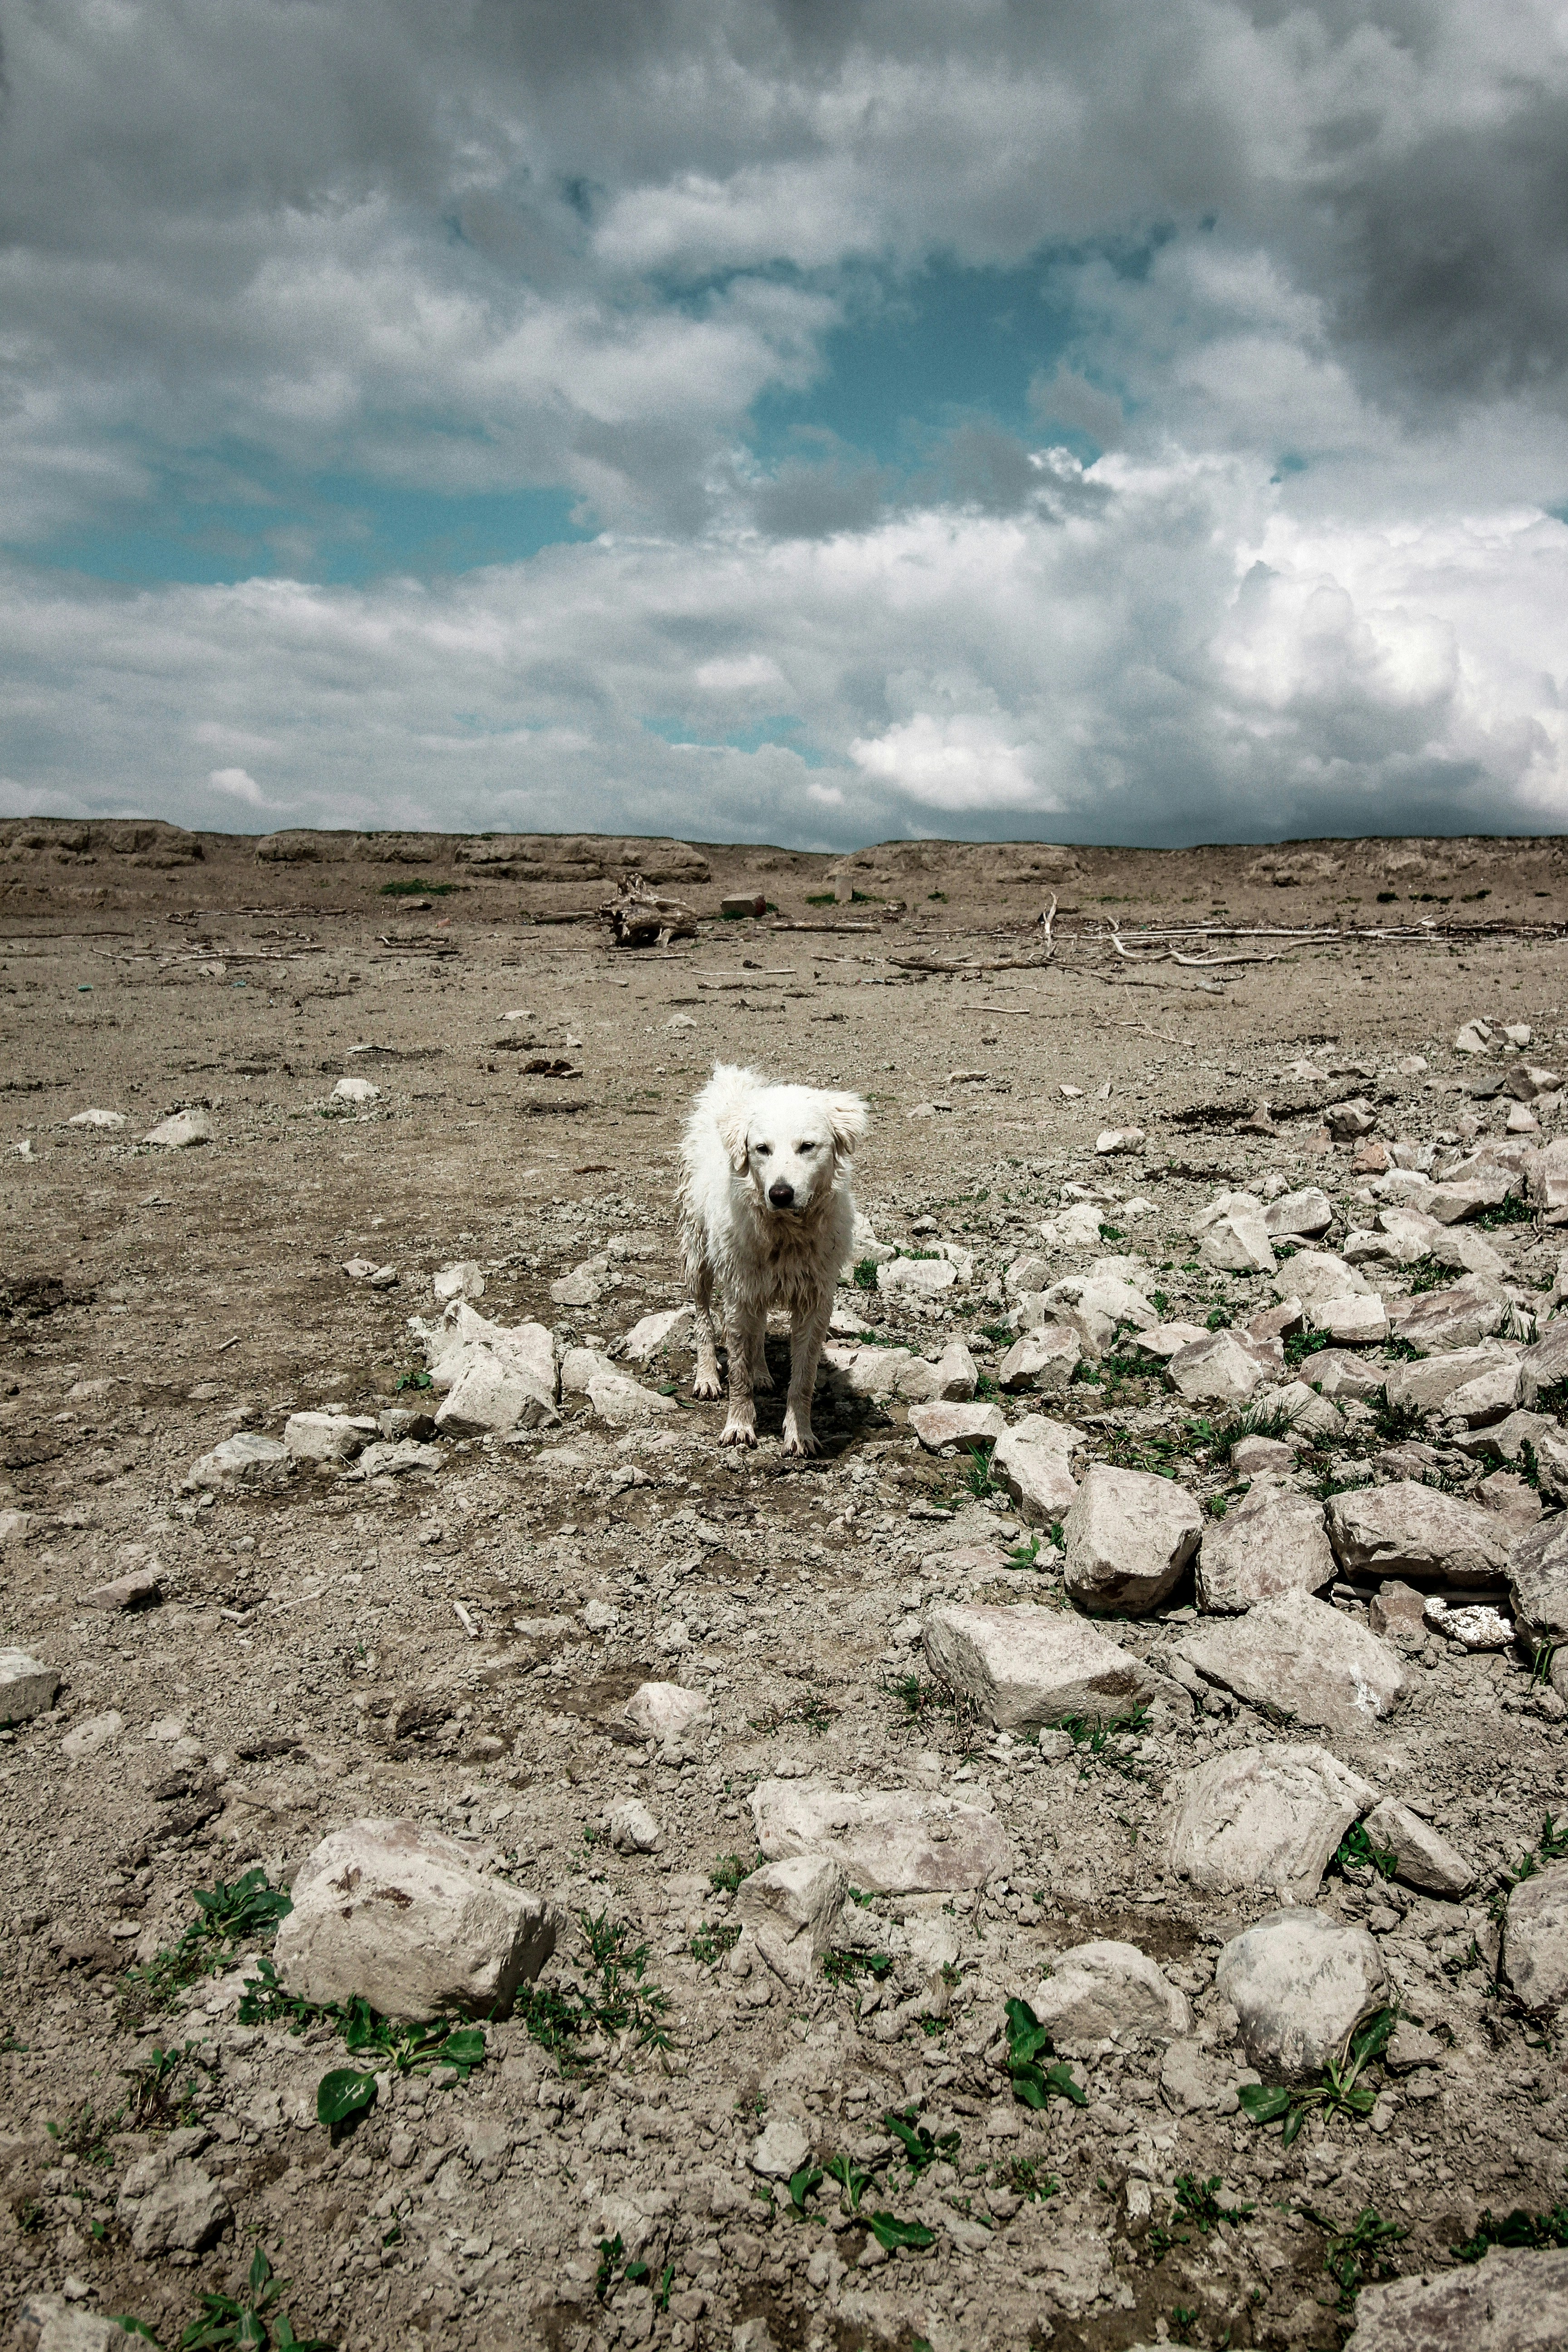 Wandering dog in a wasteland. Krčedinska ada near Novi Sad, Vojvodina, Serbia. https://instagram.com/valentinsalja